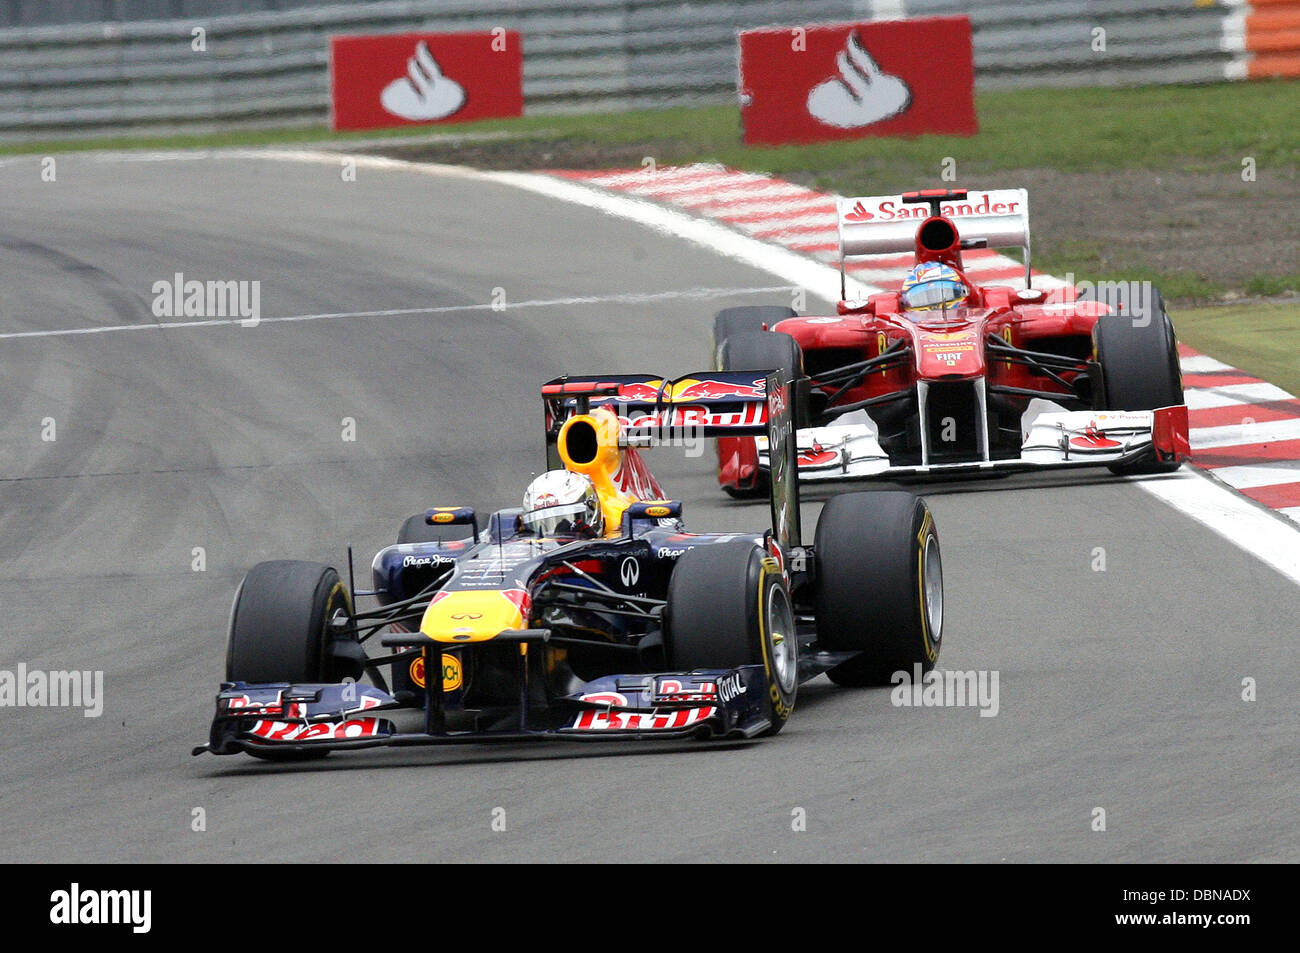 Sebastian Vettel 2011 Formula 1 German Grand Prix at Nuerburgring Eifel, Germany - 24.07.11 Stock Photo